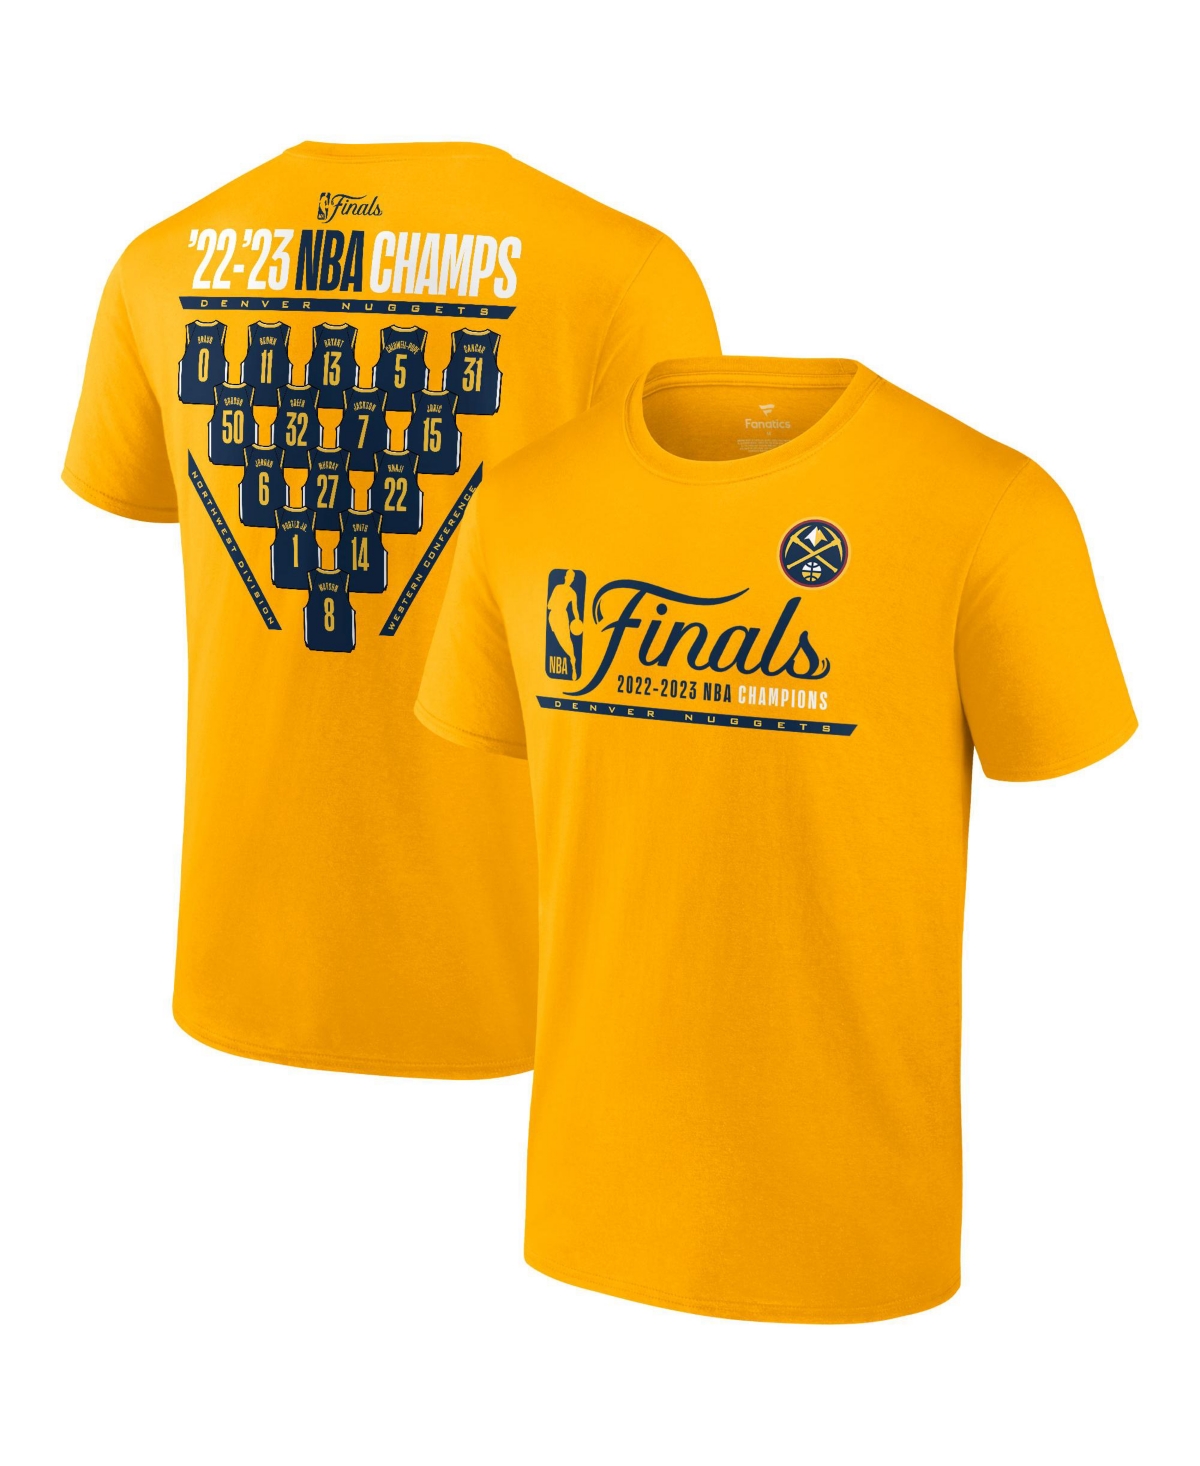 Denver Nuggets merch: Shop 2023 NBA Finals championship merchandise